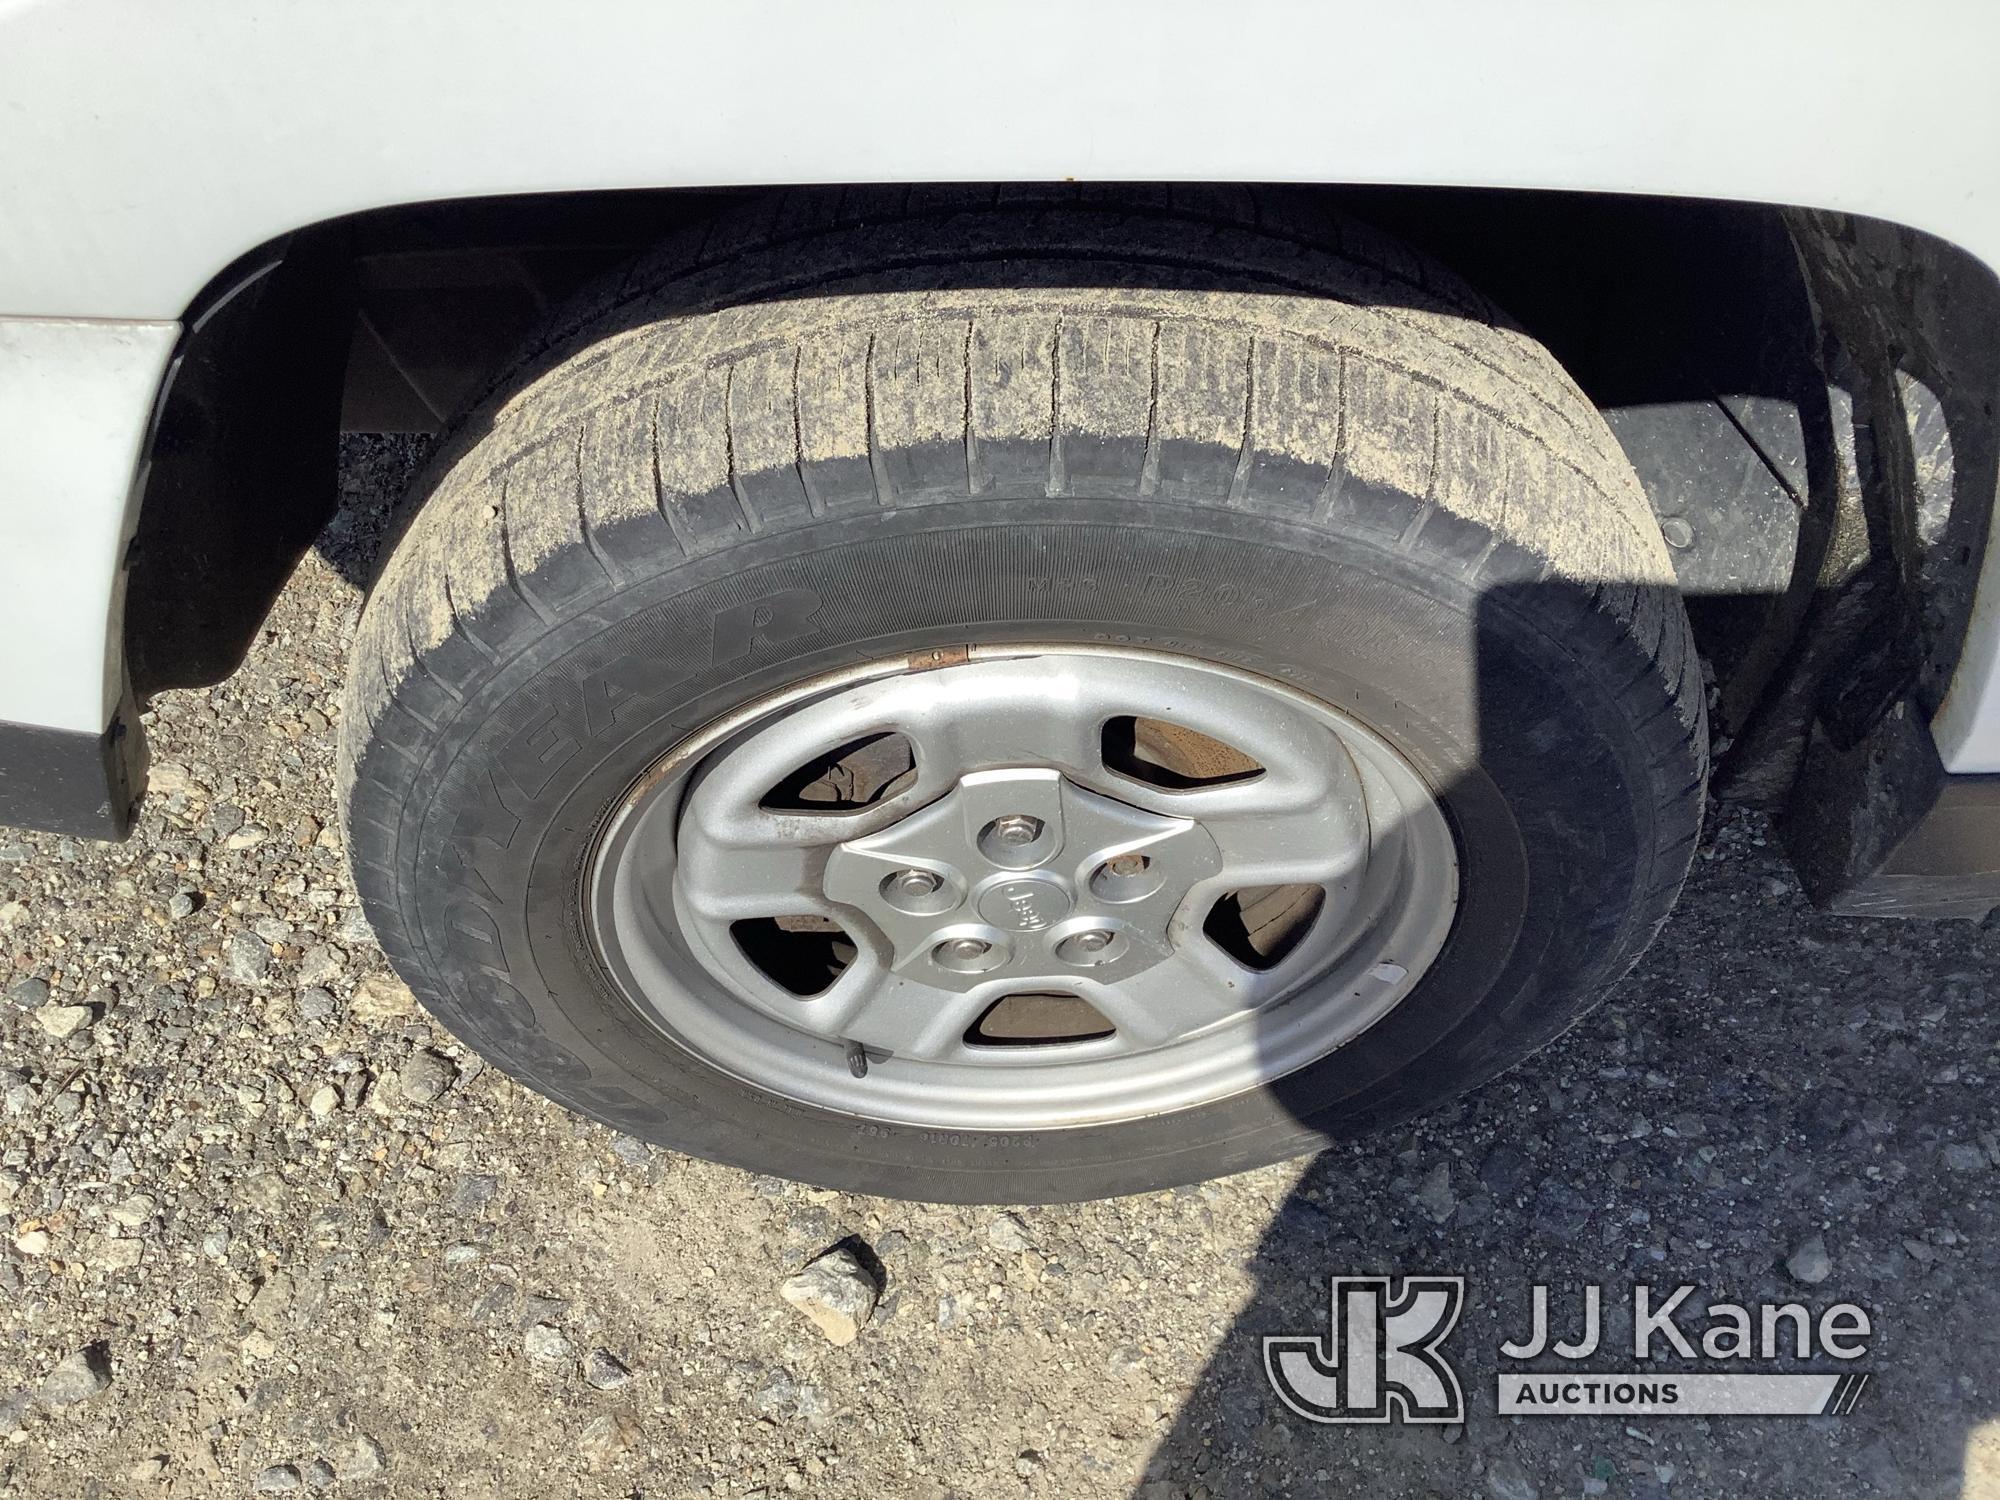 (Shrewsbury, MA) 2014 Jeep Patriot 4x4 4-Door Sport Utility Vehicle Runs & Moves) (Rust Damage